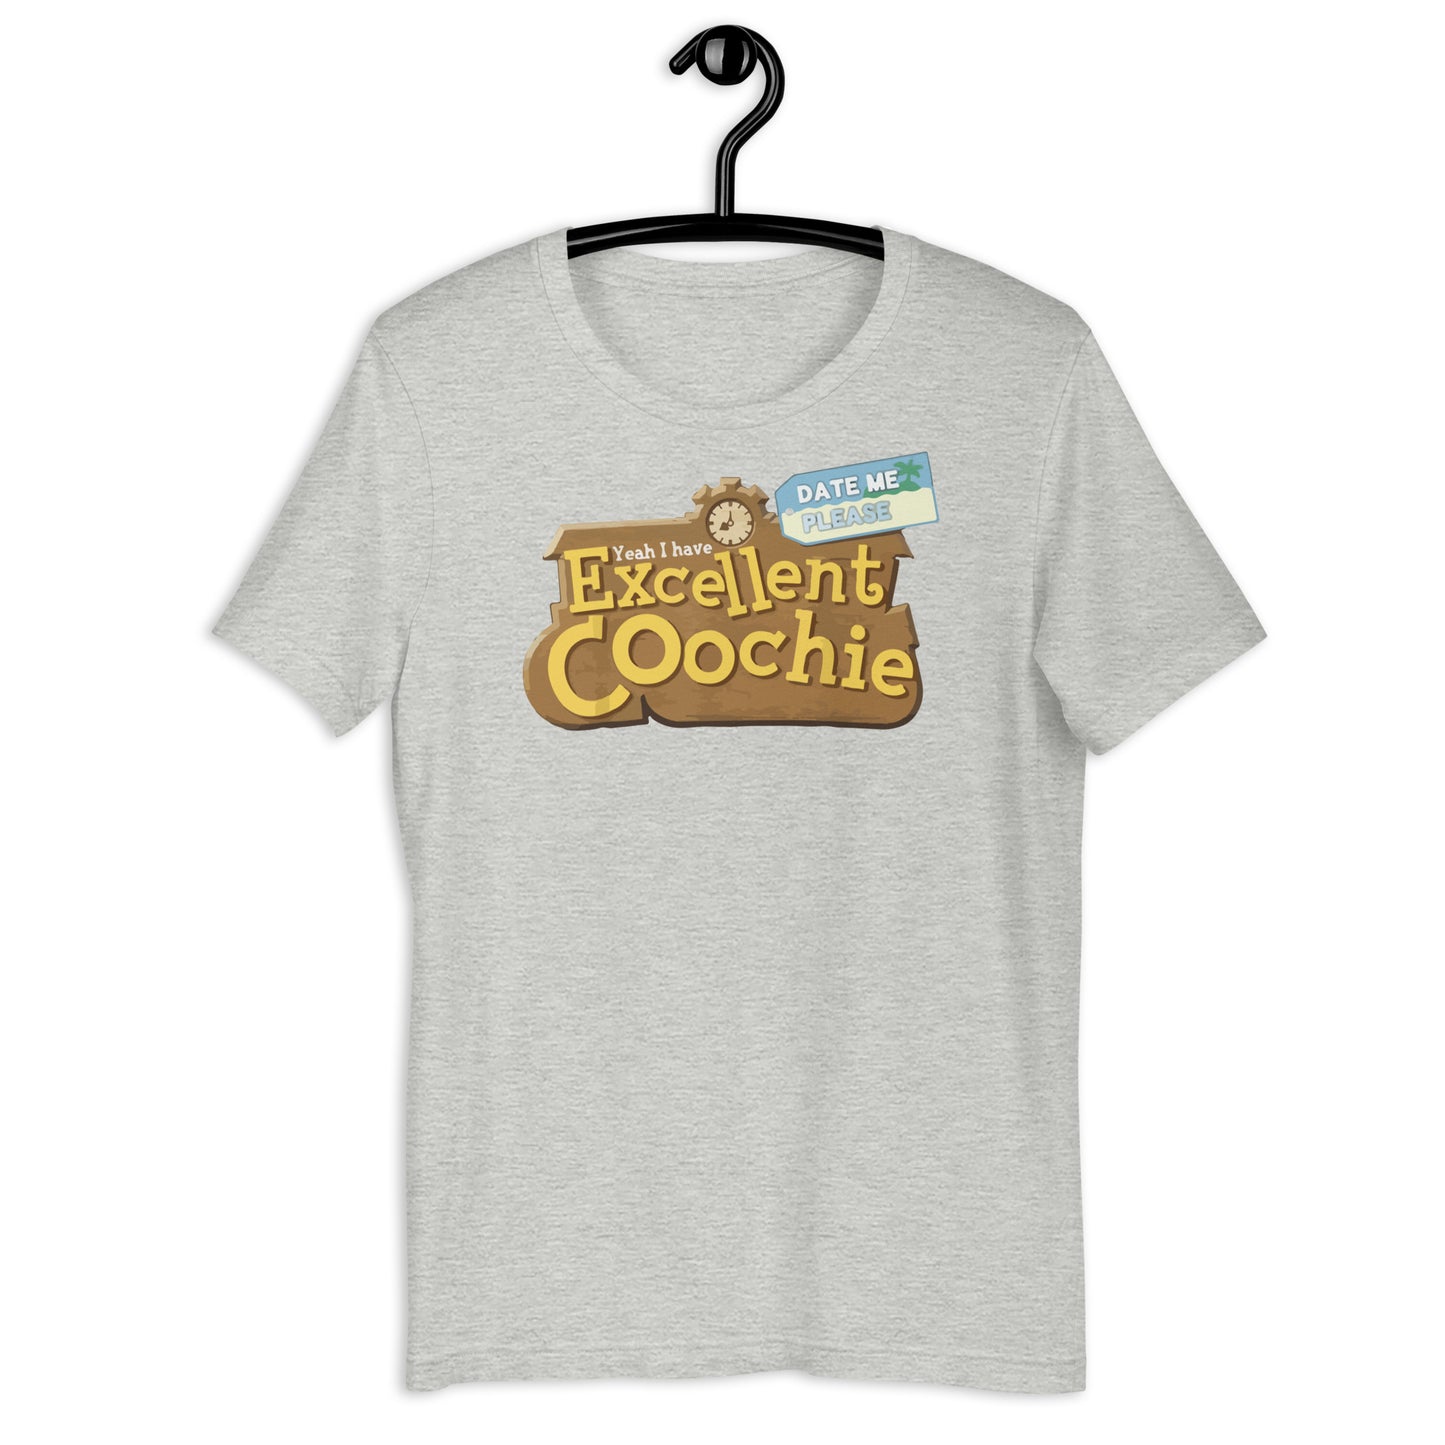 Yeah I Have Excellent Coochie Date Me Please Unisex t-shirt